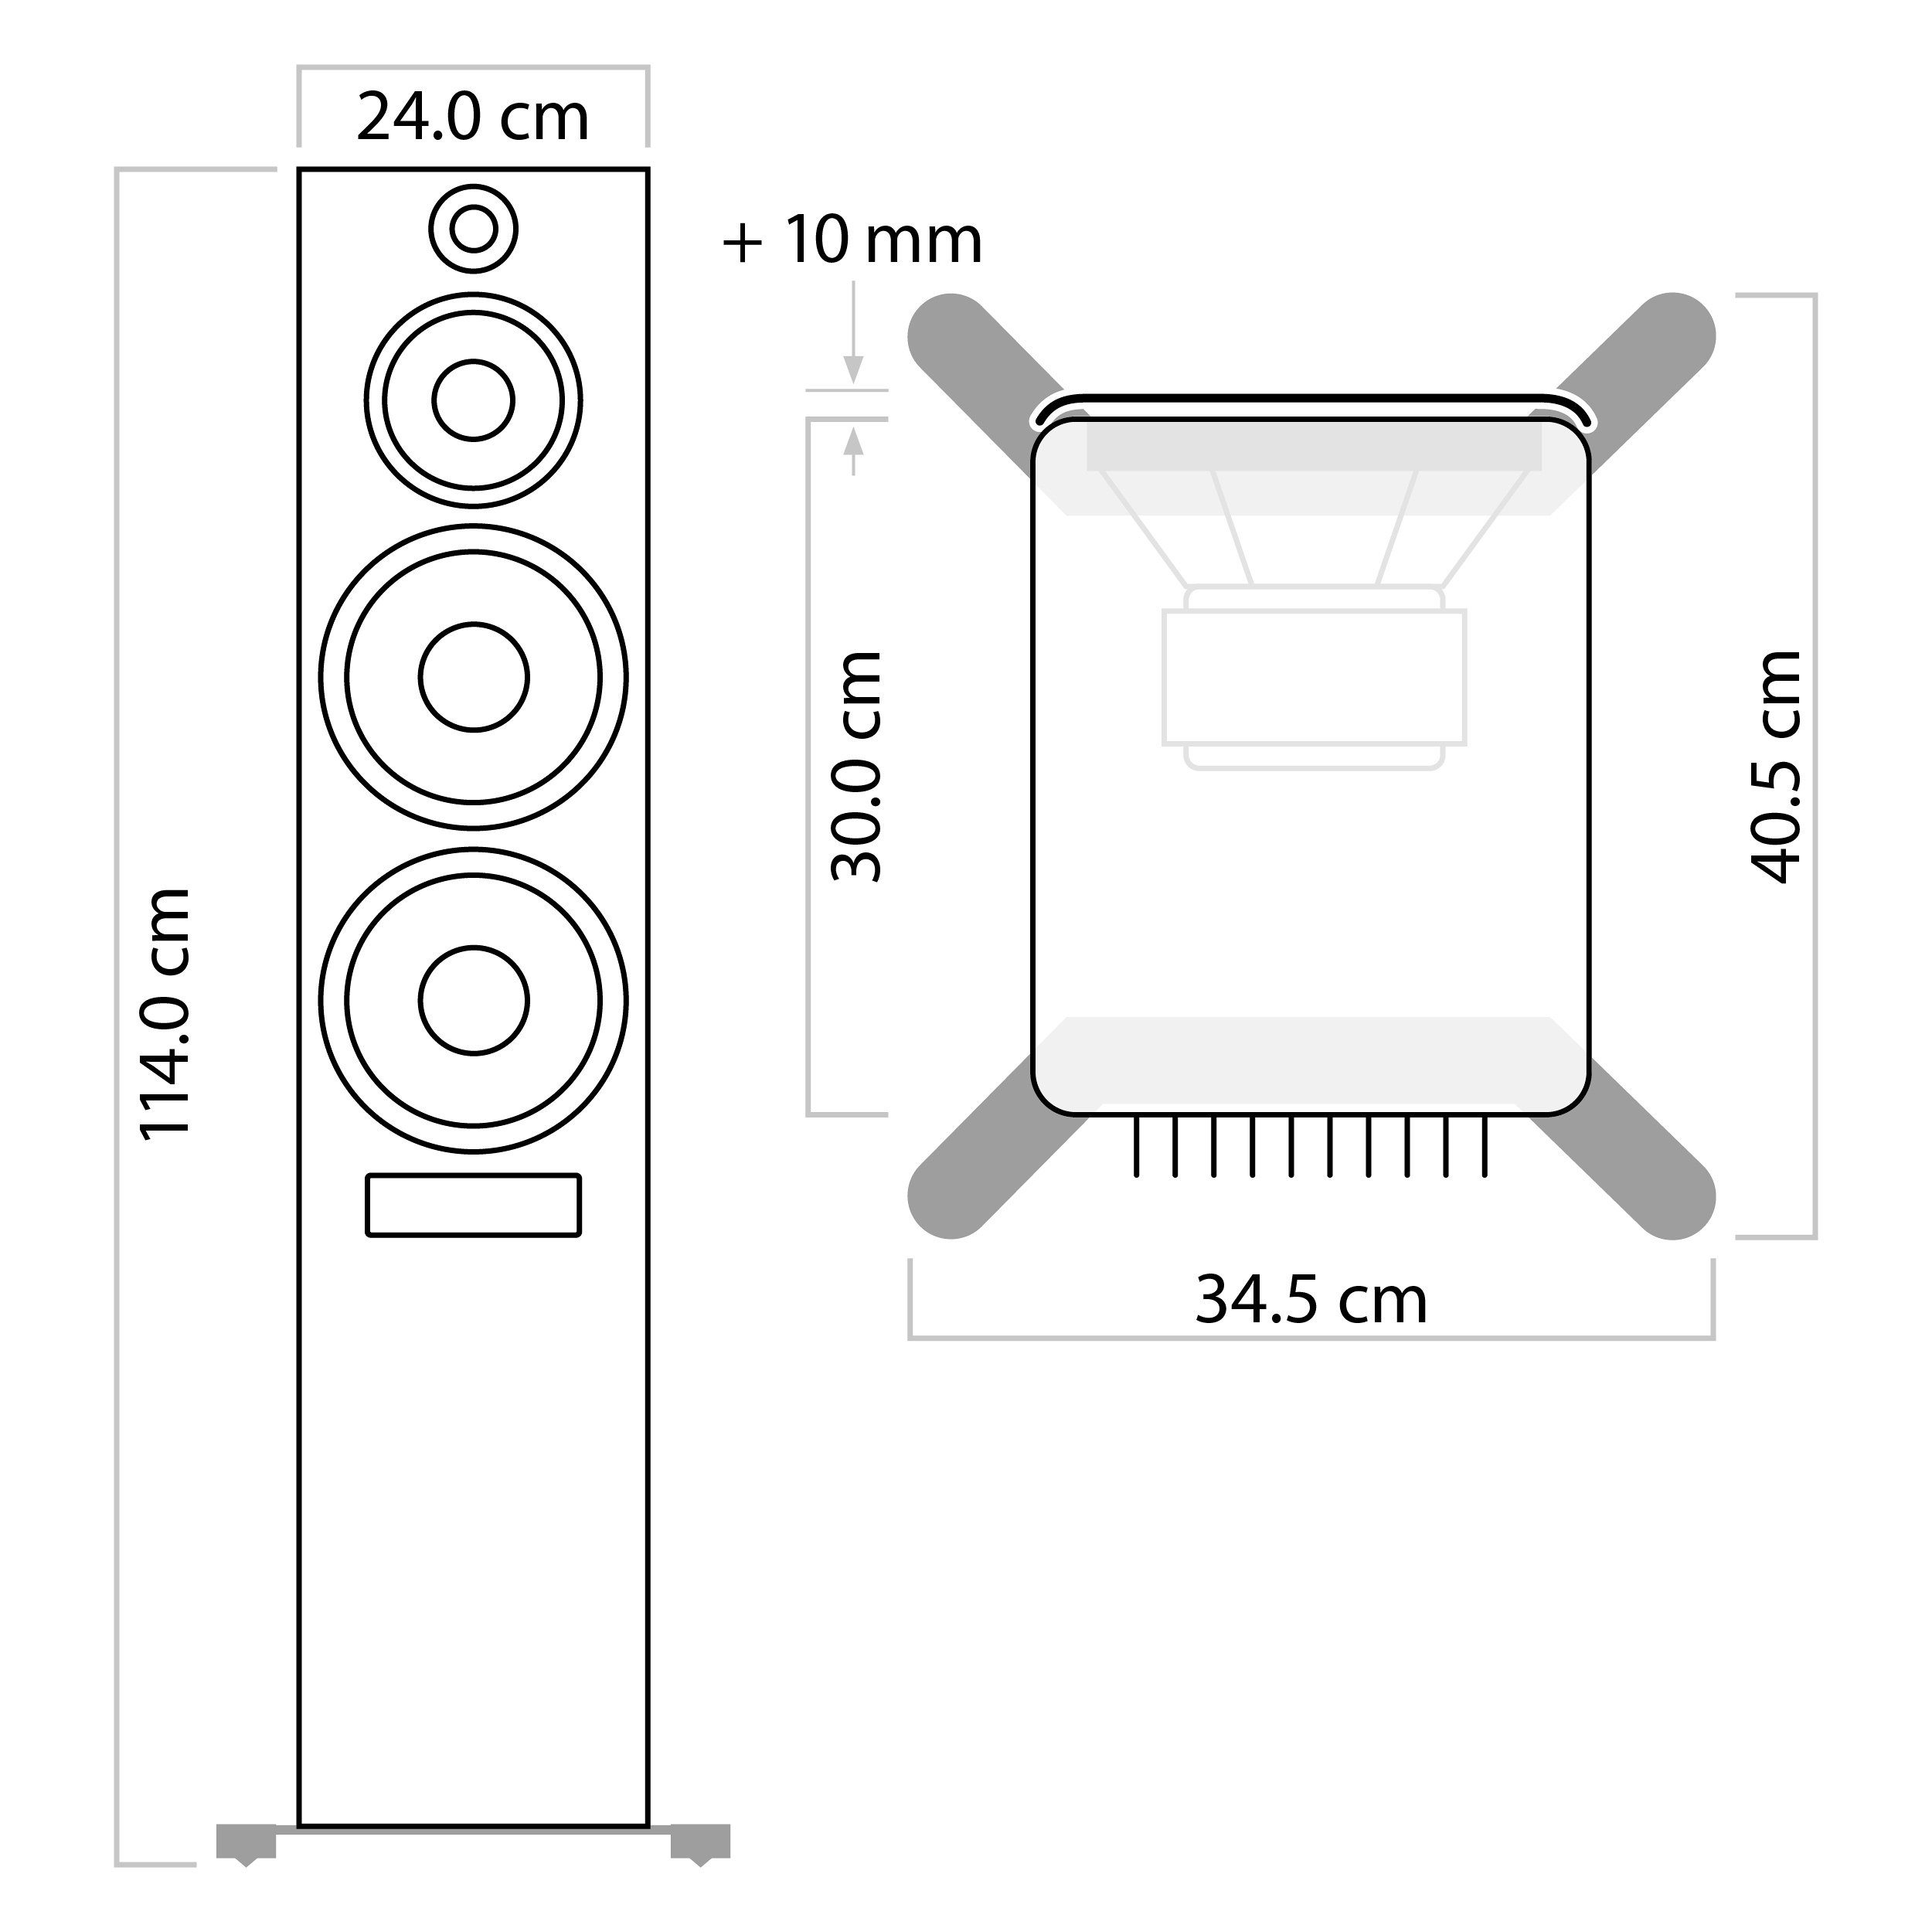 X-Remote) Stand-Lautsprecher Calibration, W, nuPro Nubert (1.120 X-Room RC XS-8000 Nubert